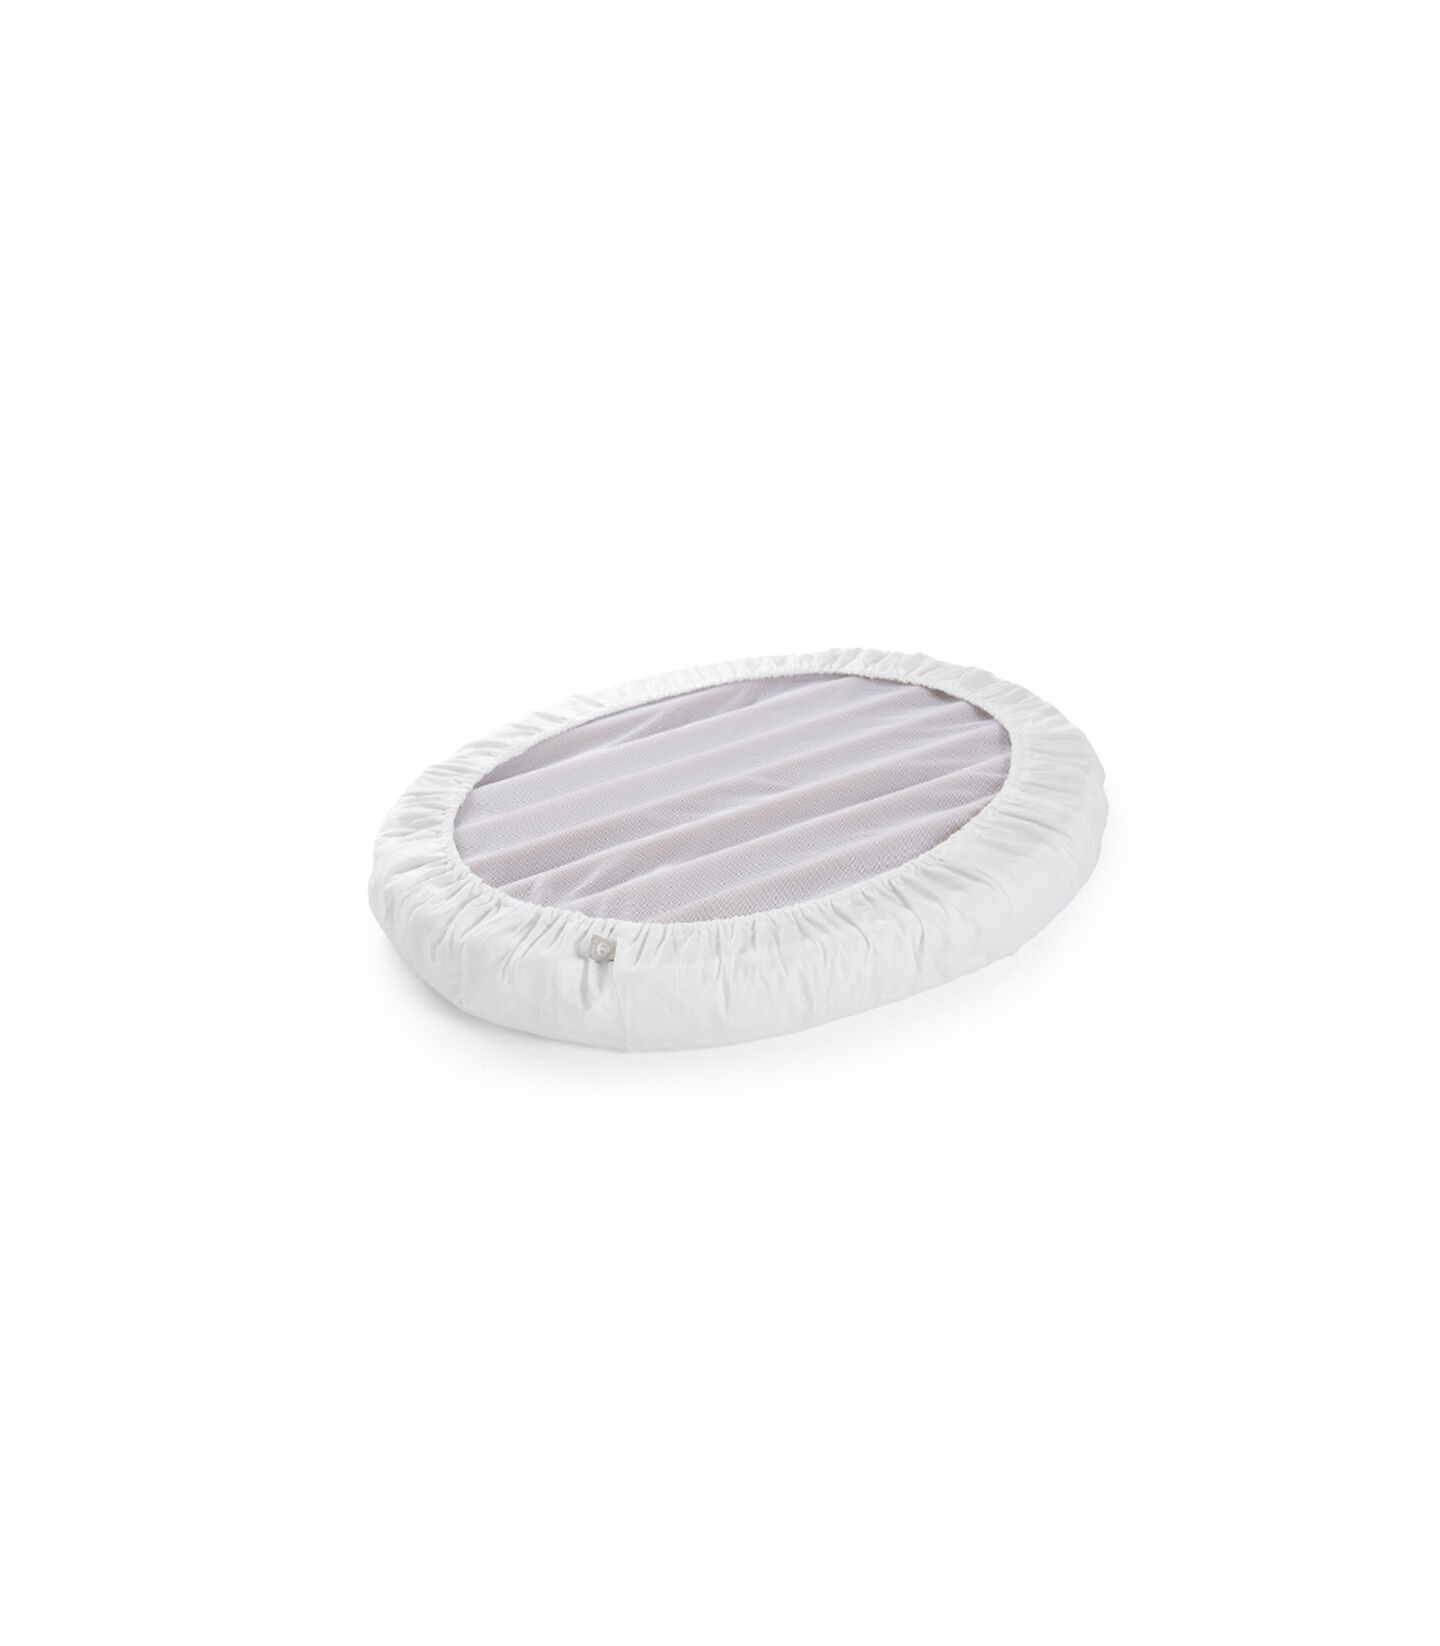 Stokke® Sleepi™ Mini Formsyet lagen White, White, mainview view 2